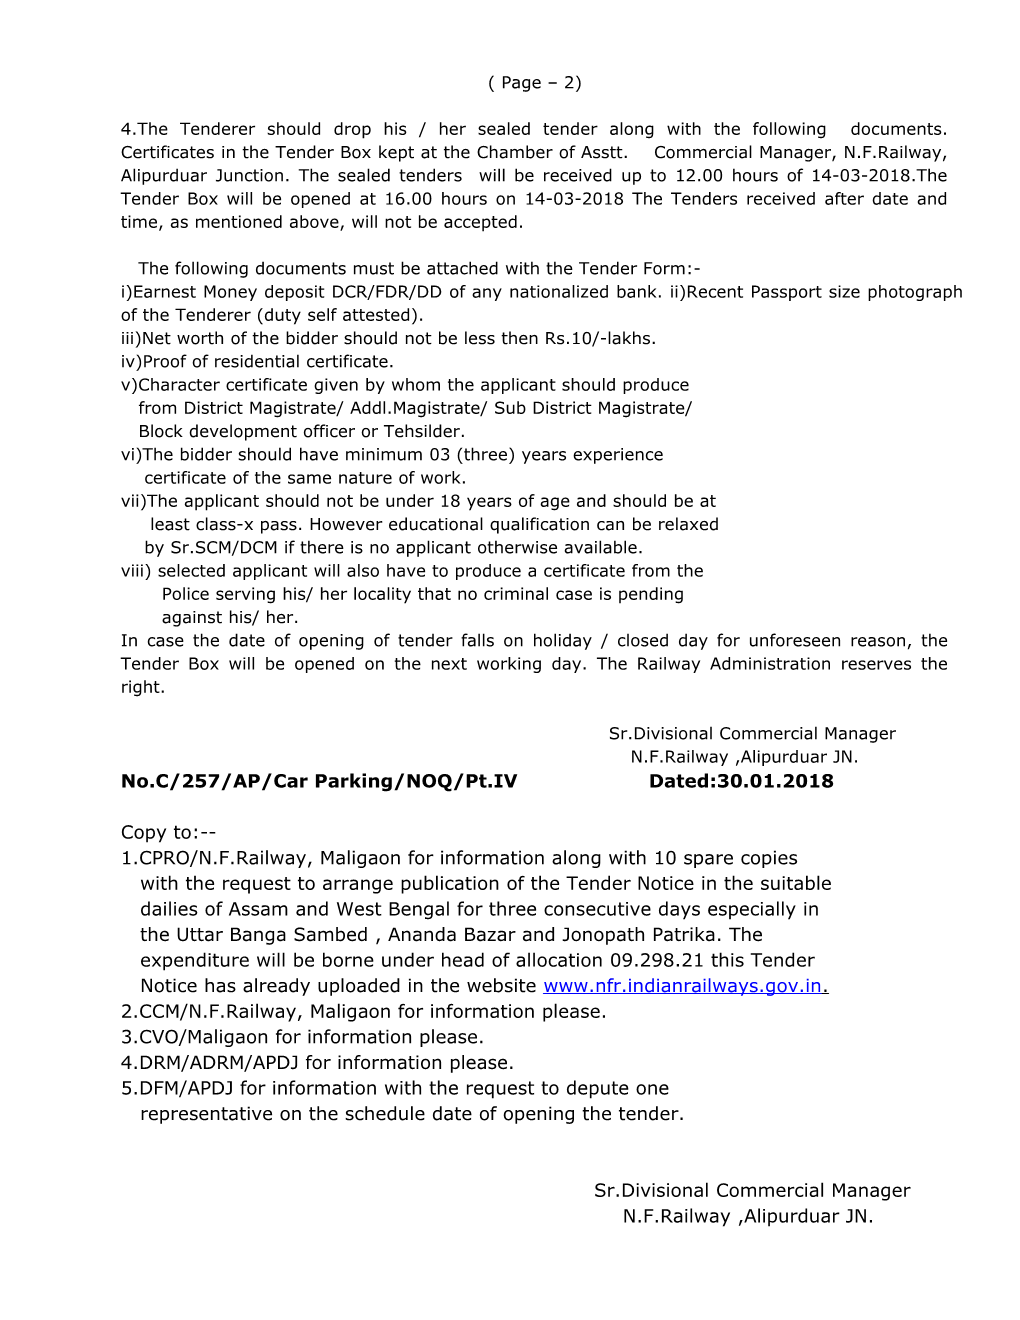 No. C/257/AP/Car Parking/NOQ/Pt.IV Dated:30/01 2018